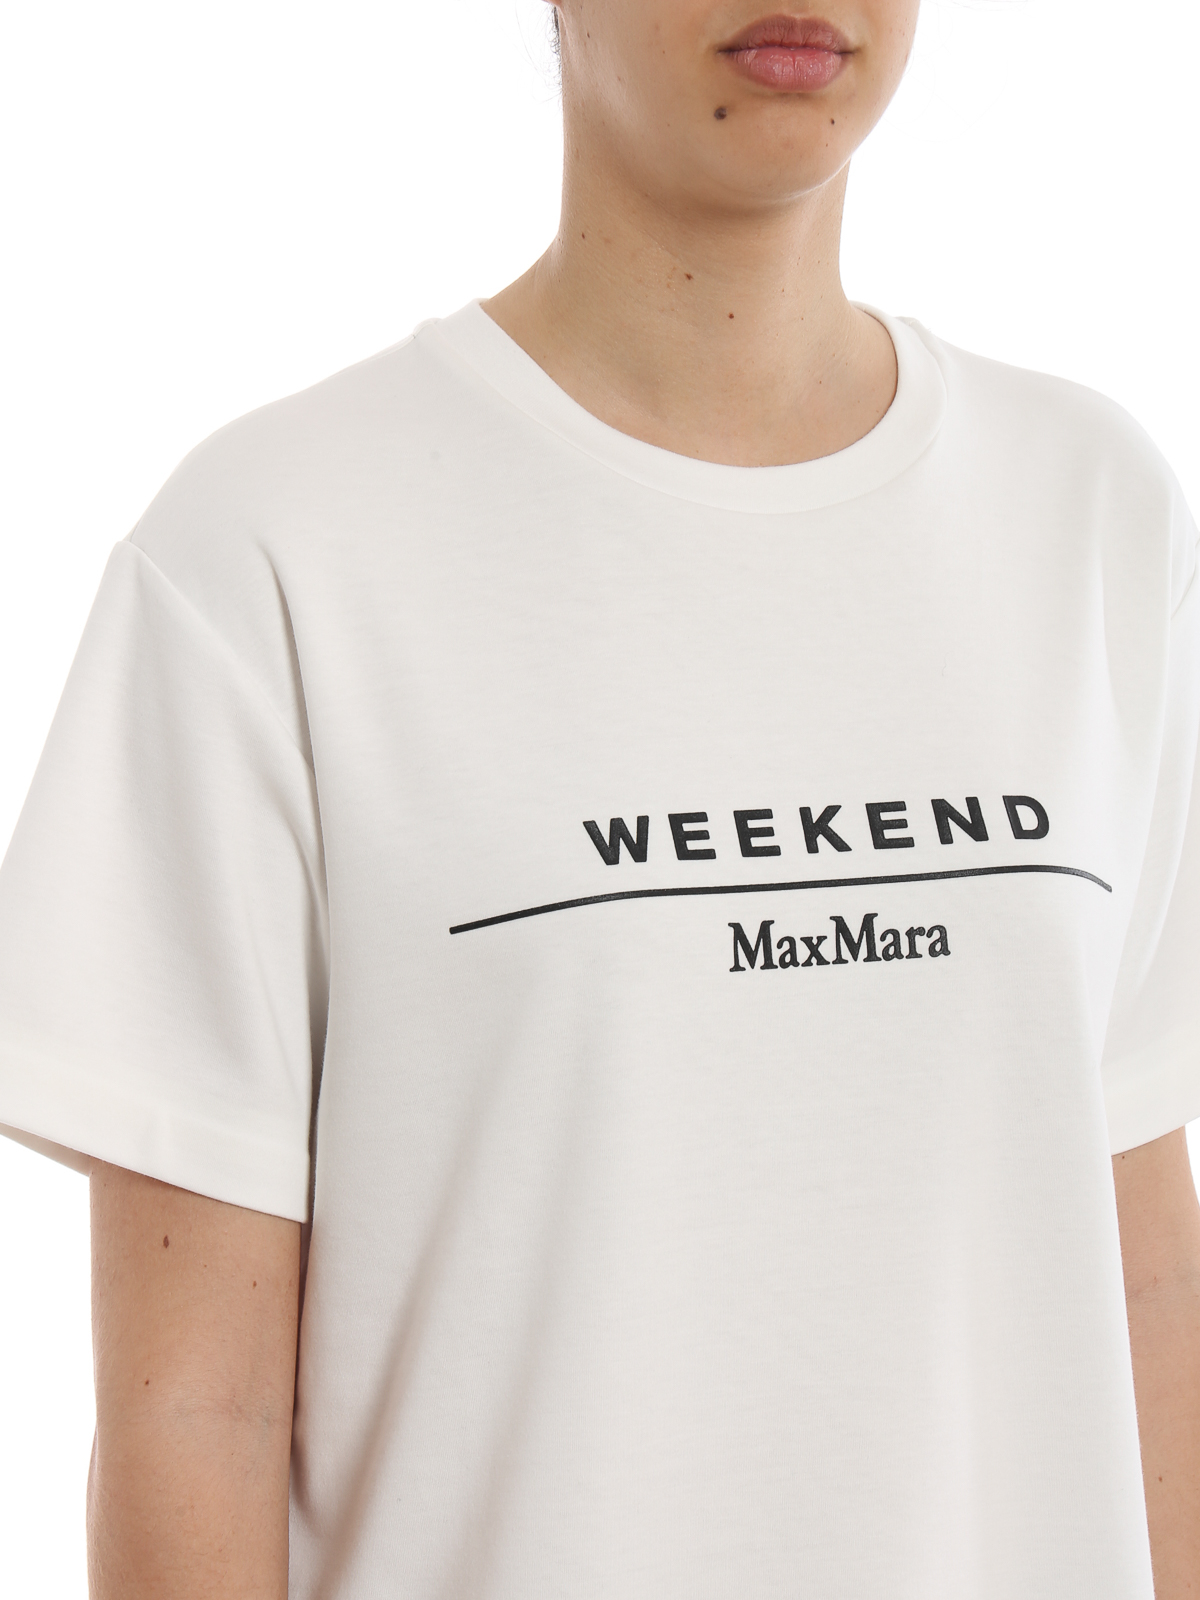 Tシャツ Weekend Max Mara - Tシャツ - Oliato - 597103976001